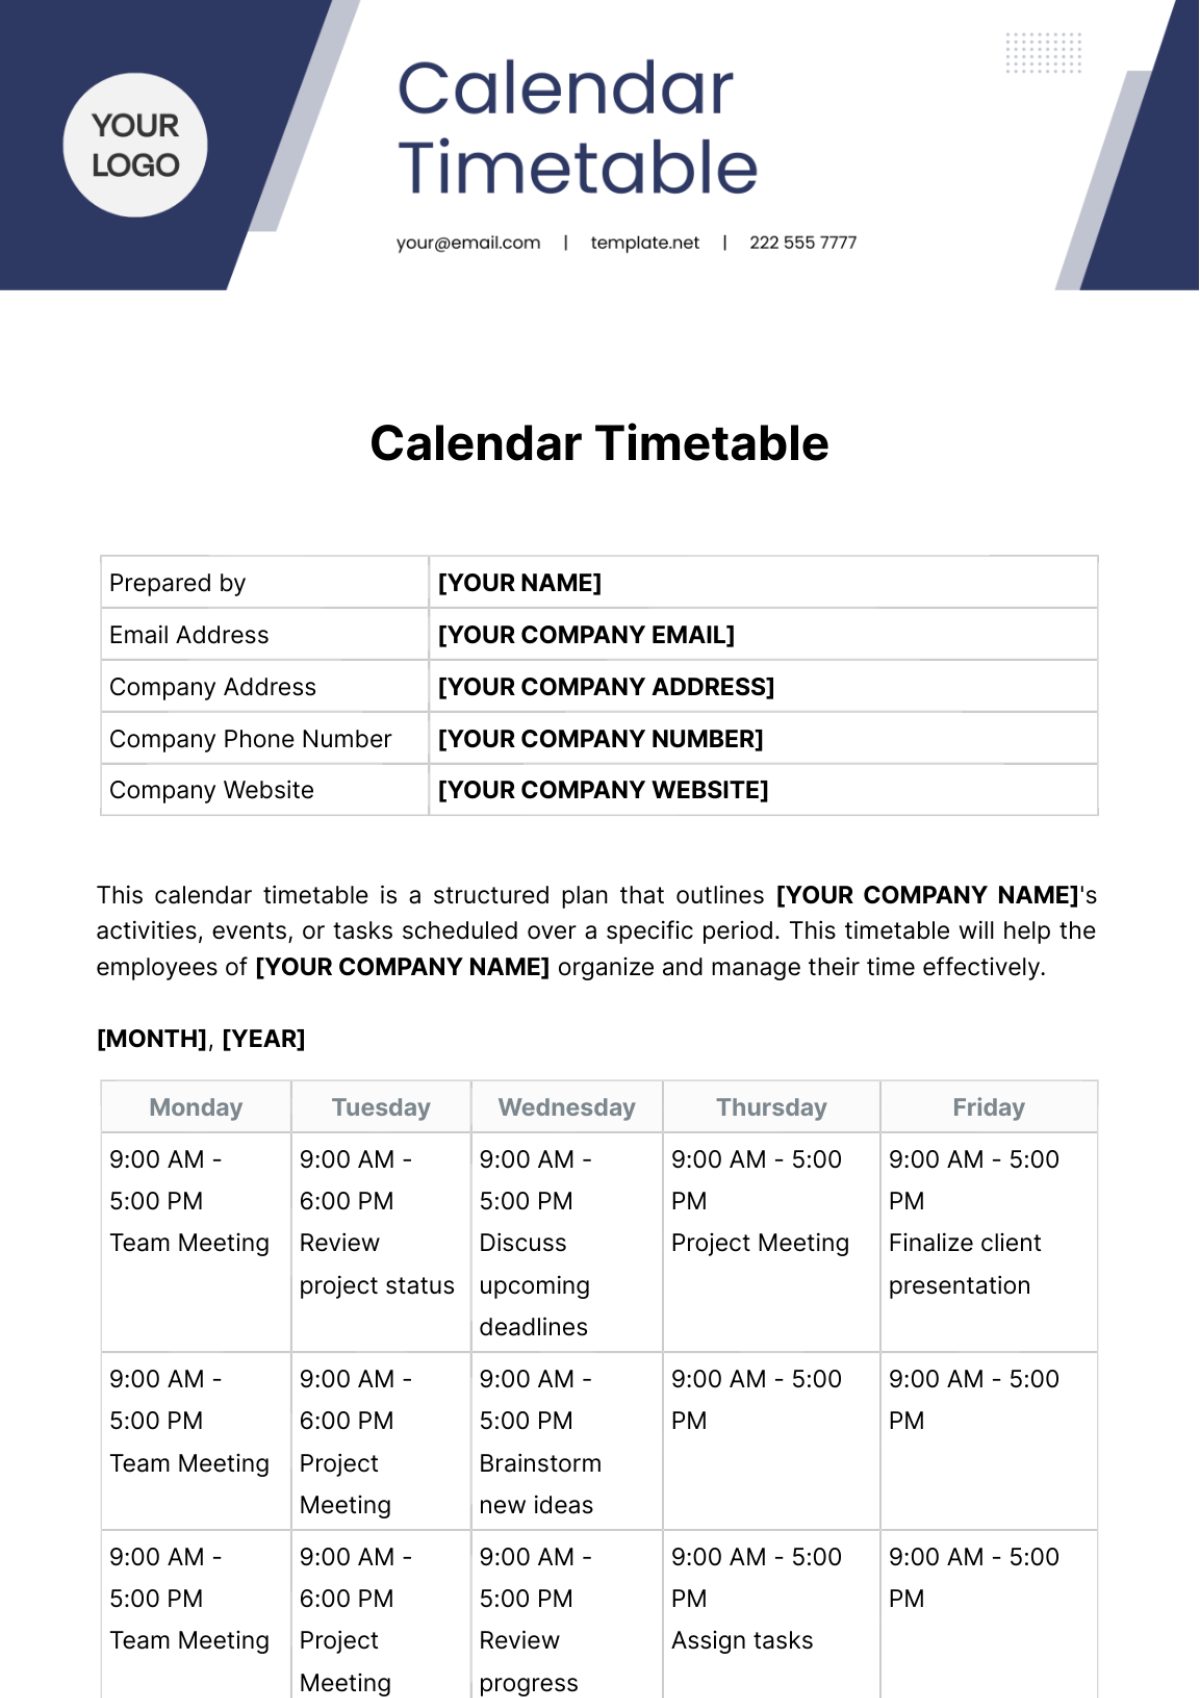 Calendar Timetable Template